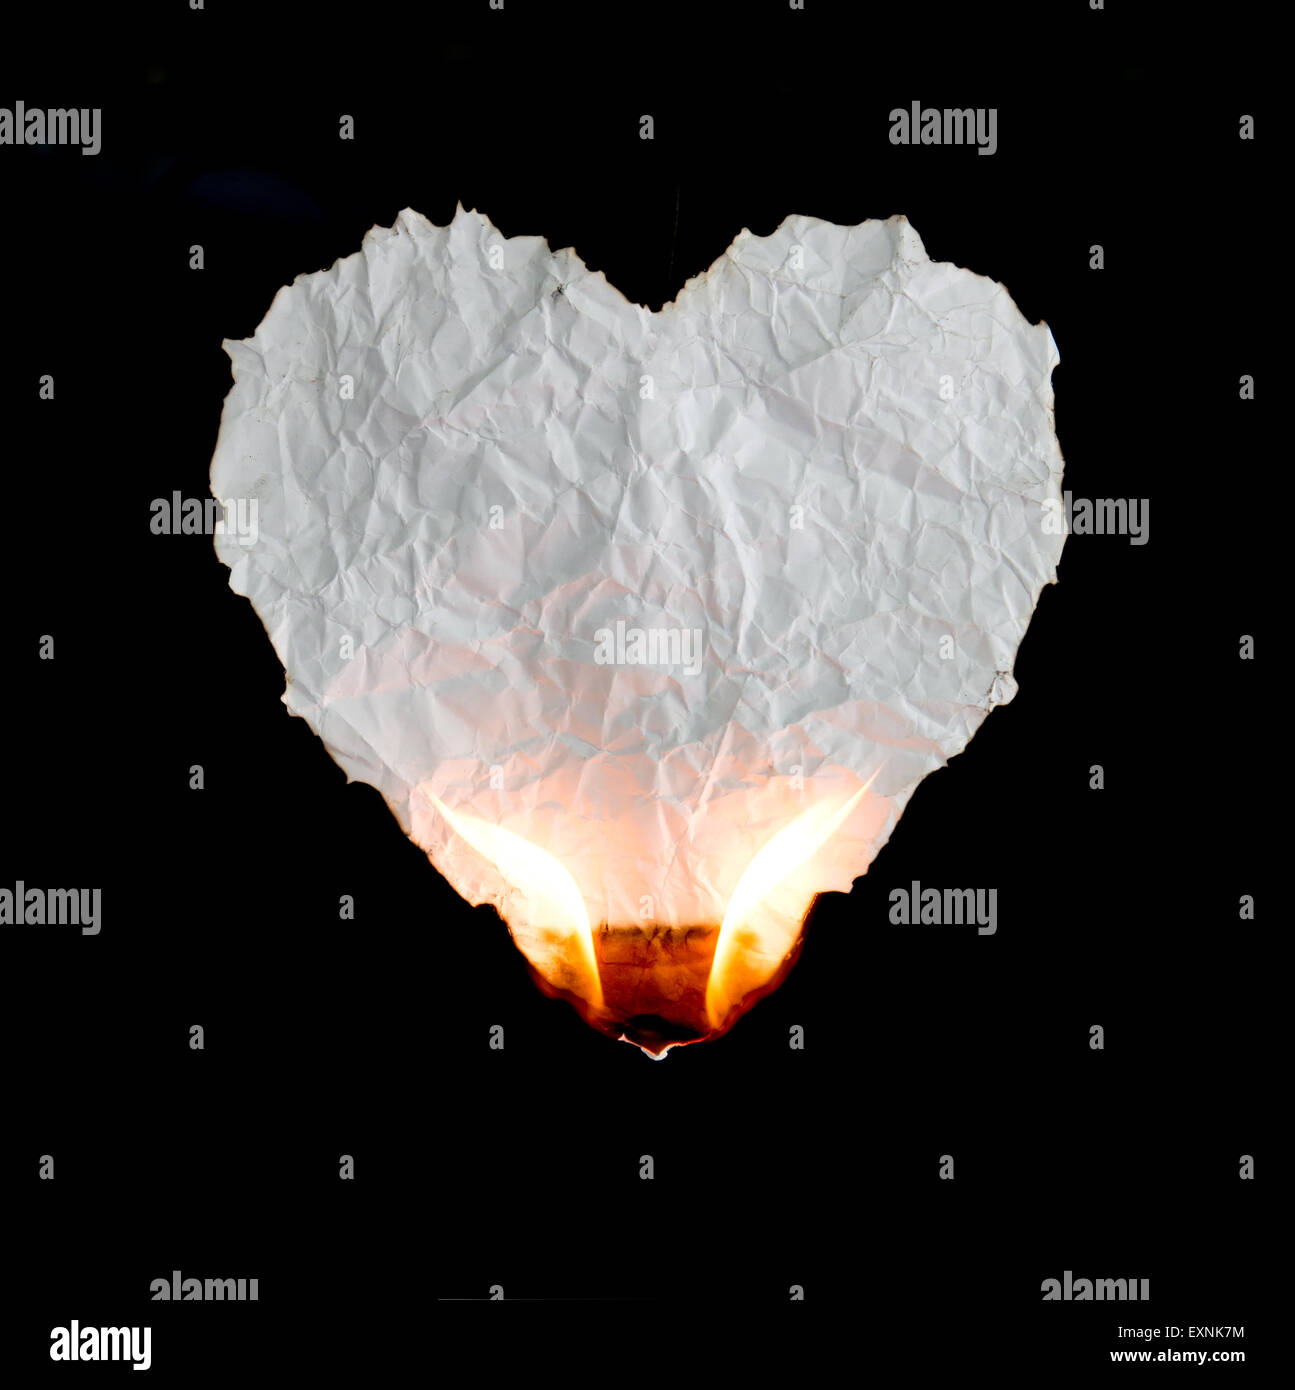 crumpled heart shape paper burning on black background Stock Photo